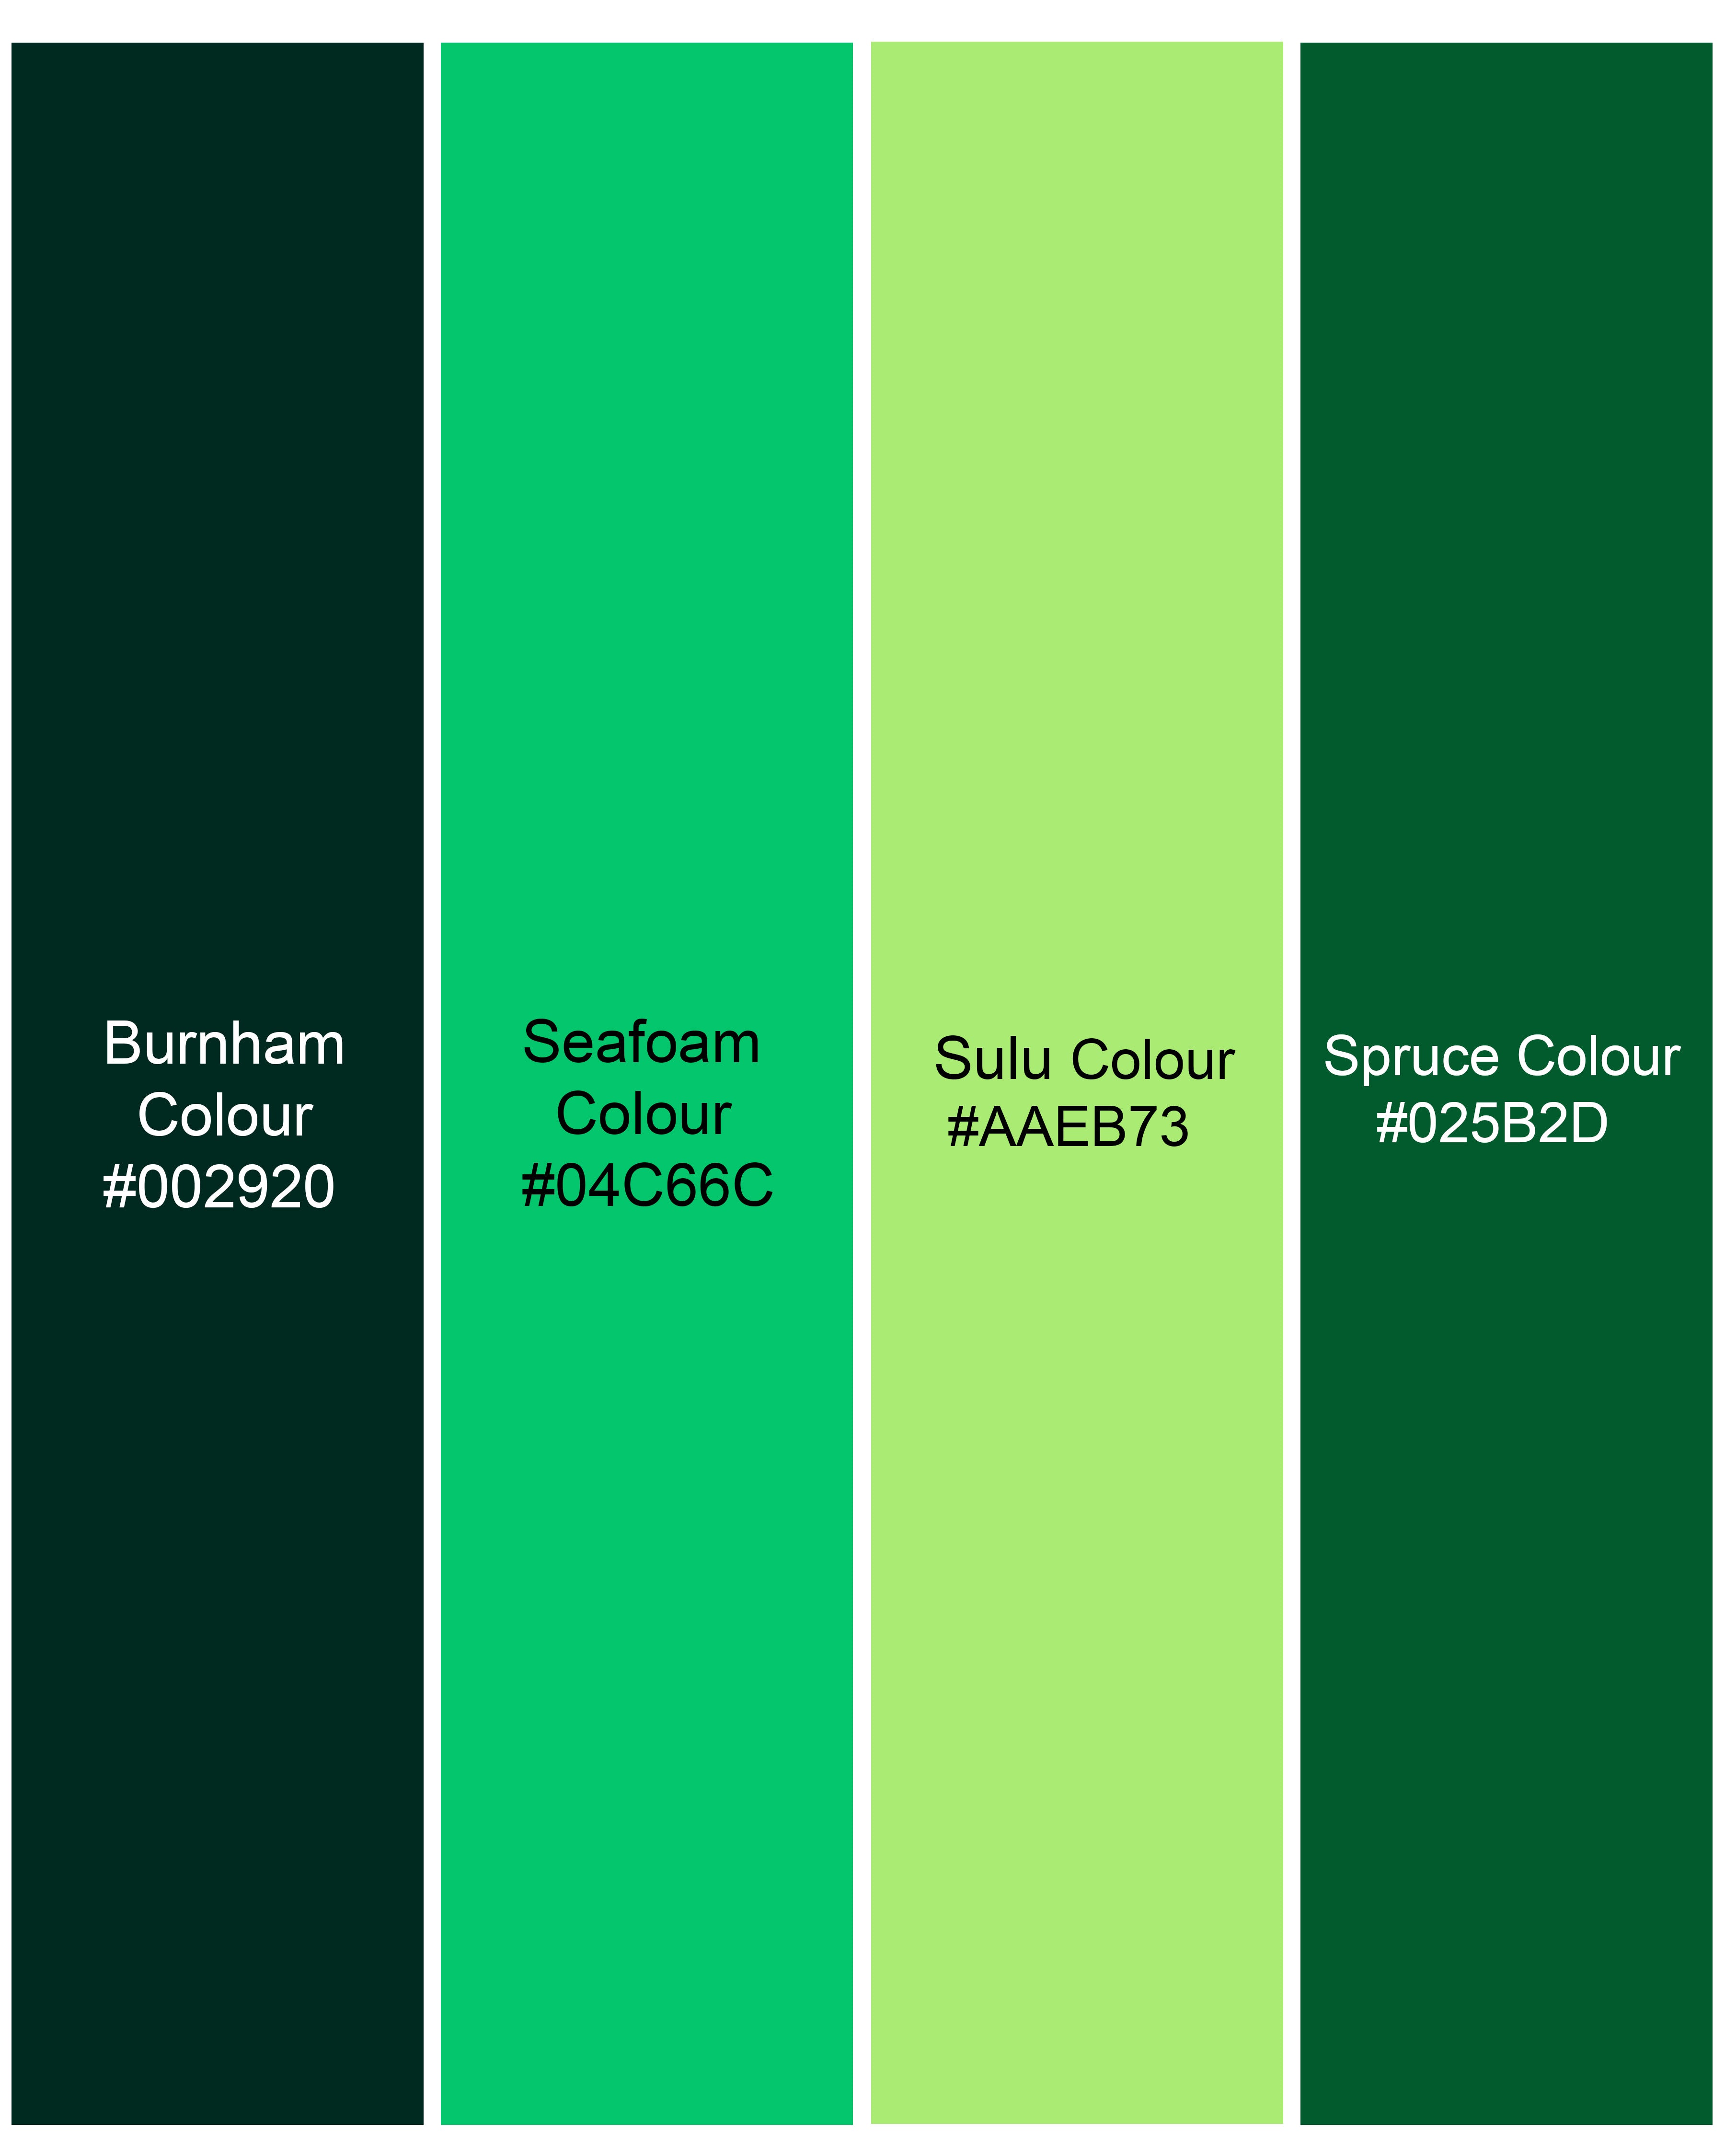 Burnham Green with Seafoam Green Multicolour Printed Super Soft Premium Cotton Shirt 9675-GR-38, 9675-GR-H-38, 9675-GR-39, 9675-GR-H-39, 9675-GR-40, 9675-GR-H-40, 9675-GR-42, 9675-GR-H-42, 9675-GR-44, 9675-GR-H-44, 9675-GR-46, 9675-GR-H-46, 9675-GR-48, 9675-GR-H-48, 9675-GR-50, 9675-GR-H-50, 9675-GR-52, 9675-GR-H-52